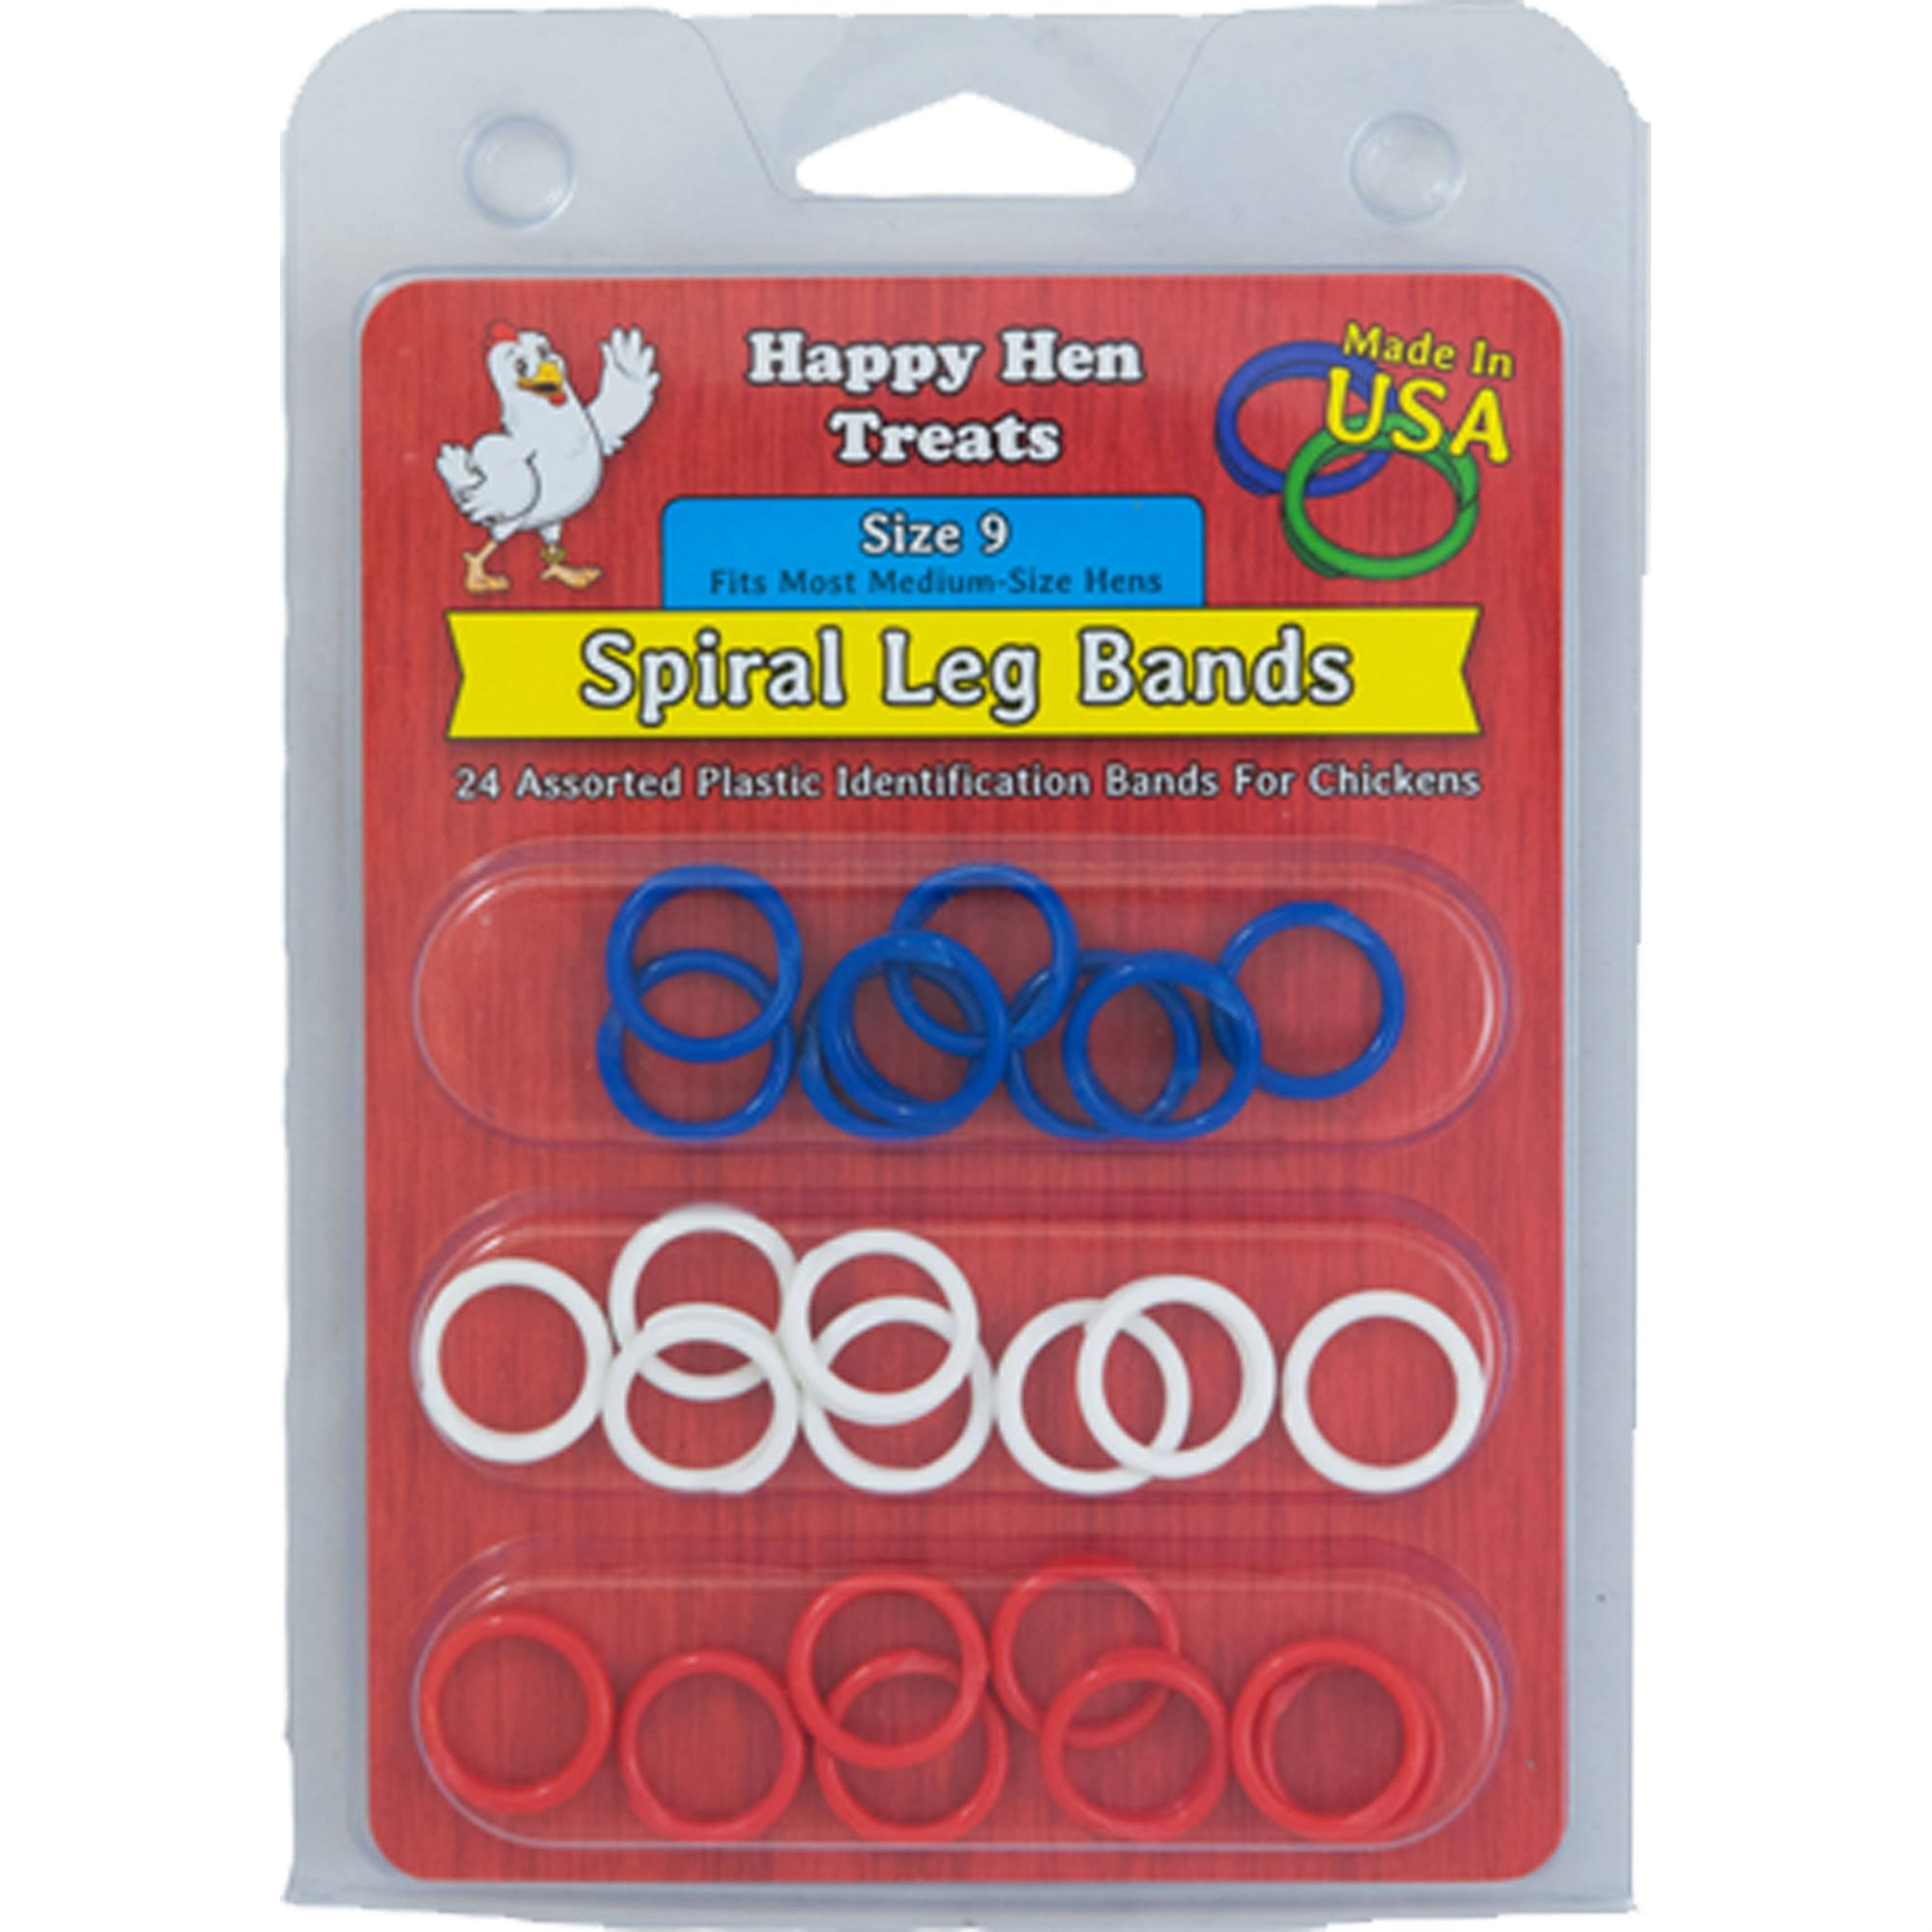 Happy Hen Treats Poultry Spiral Leg Bands - Size 9, 24pk